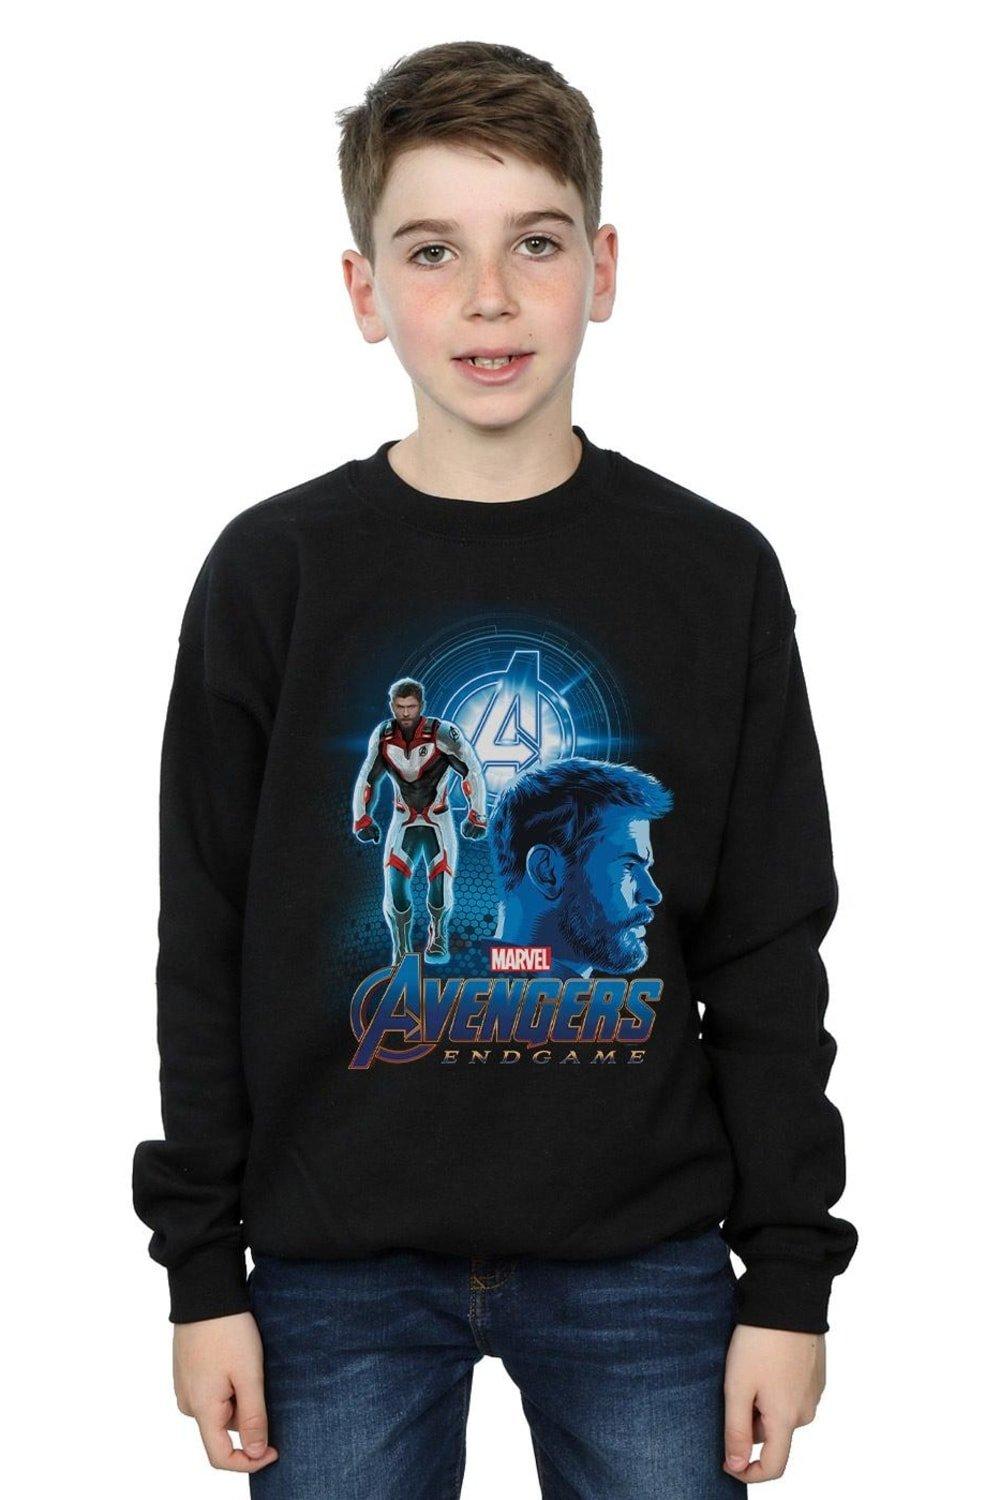 Avengers Endgame Thor Team Suit Sweatshirt